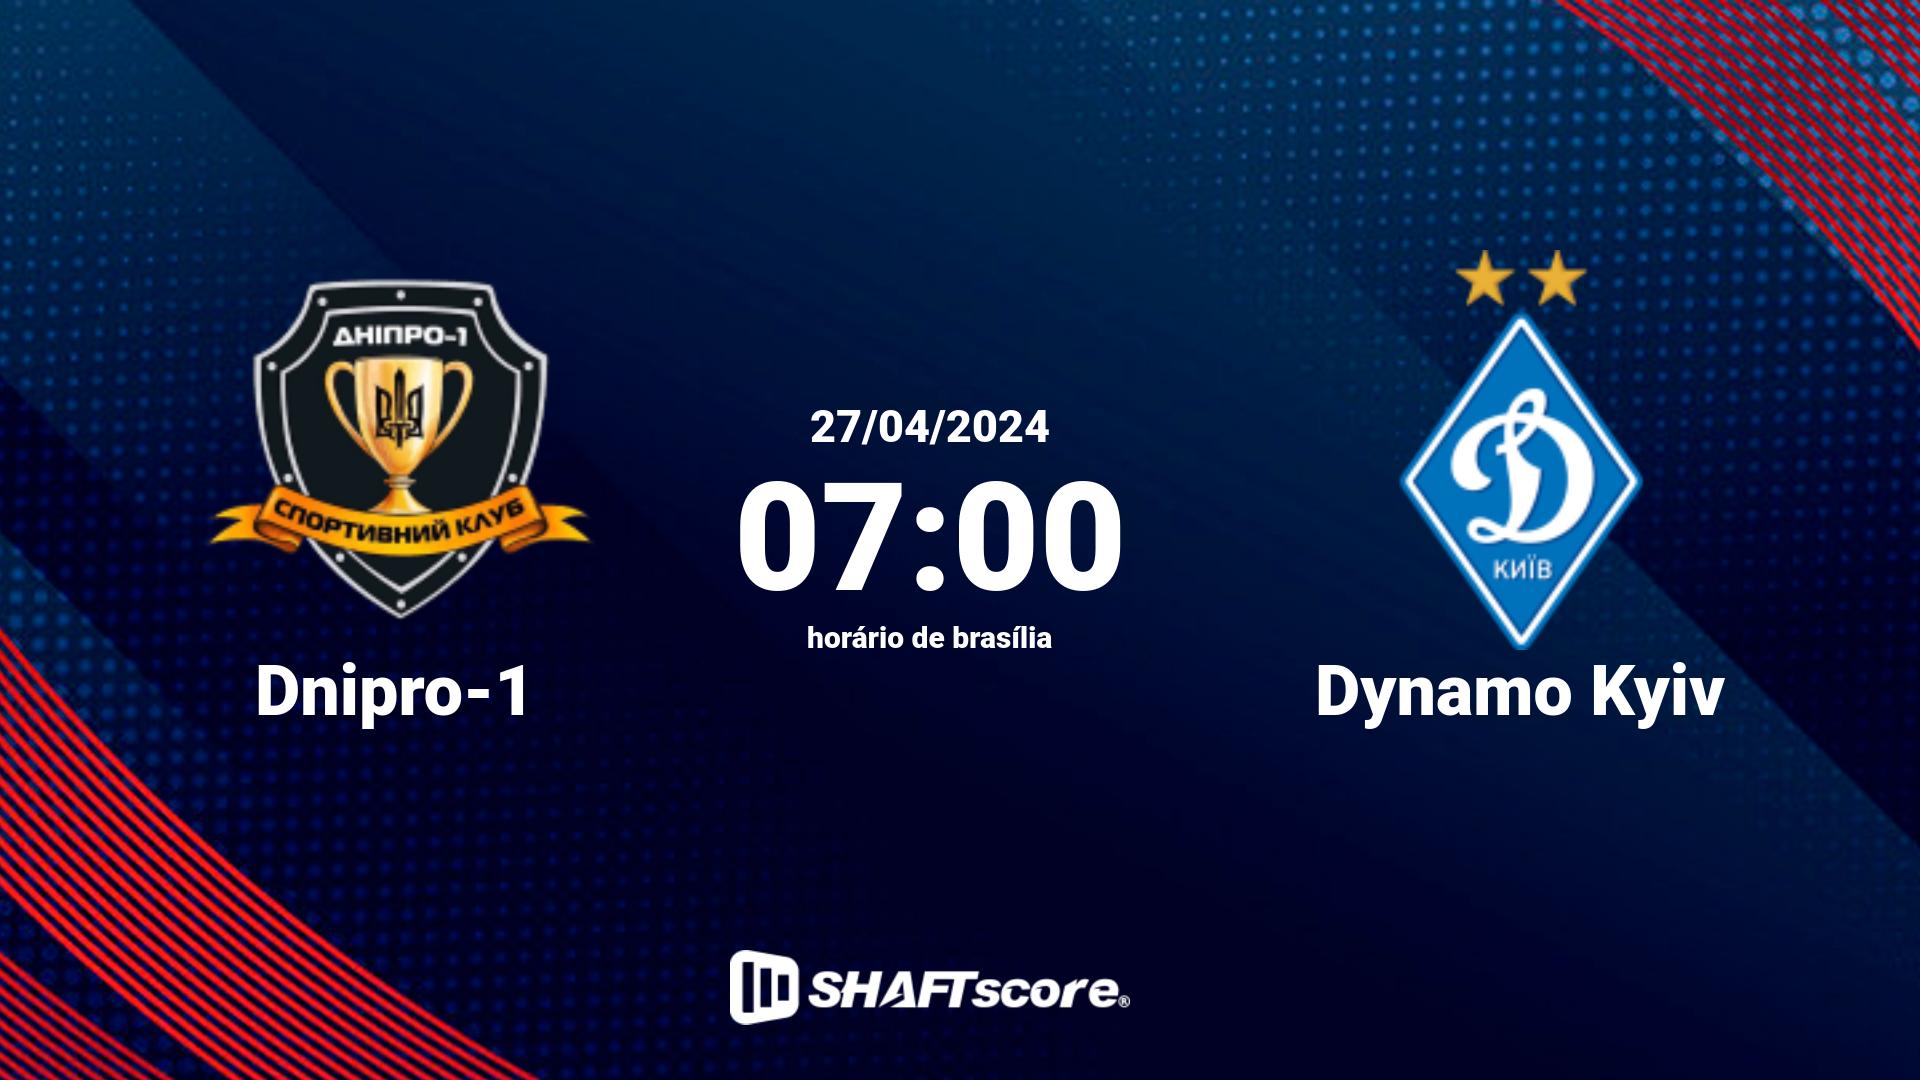 Estatísticas do jogo Dnipro-1 vs Dynamo Kyiv 27.04 07:00